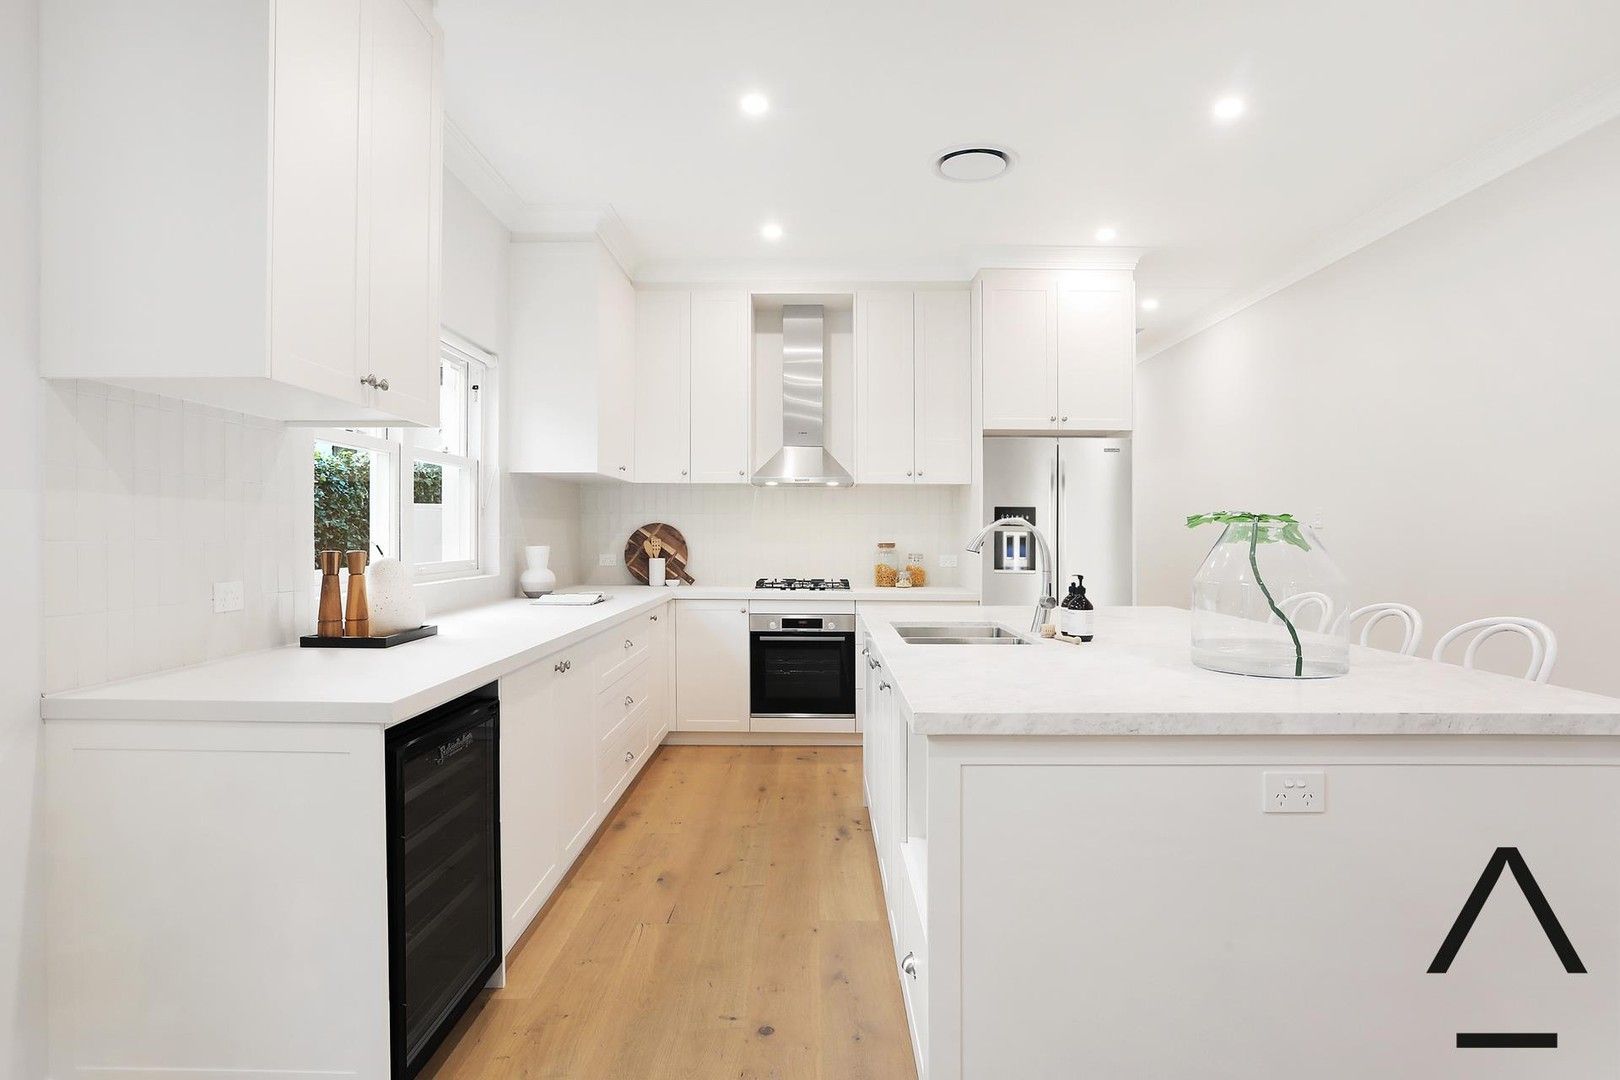 3 bedrooms House in 15 View Street WOOLLAHRA NSW, 2025